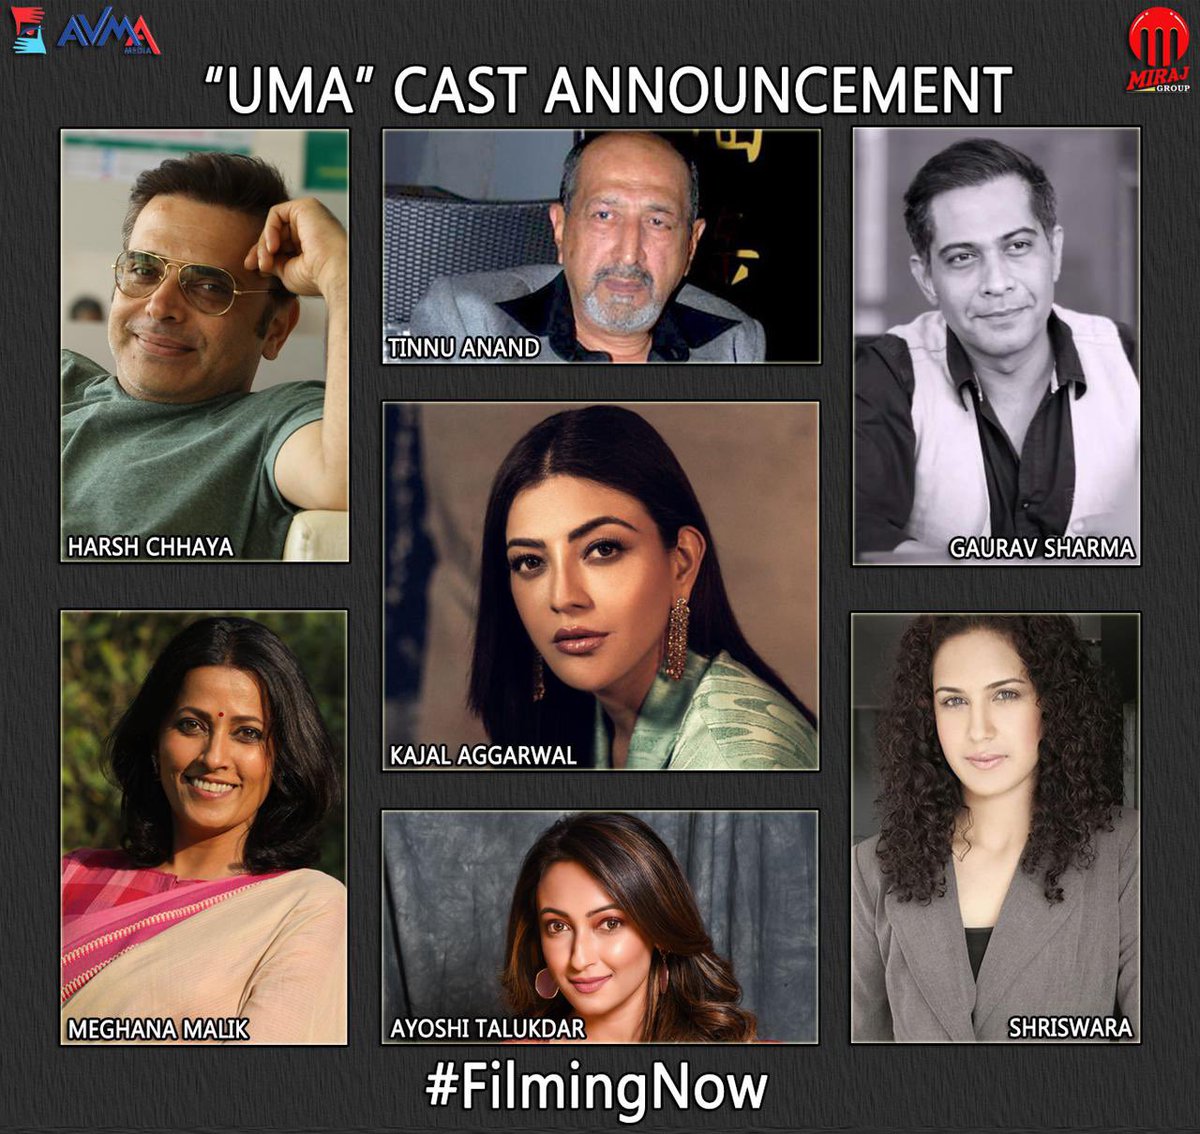 #Uma - starring #KajalAggarwal, #HarshChhaya, #TinnuAnand, @meghna1malik, #AyoshiTalukdar, #Shriswara and #GauravSharma - has commenced start-to-finish shoot in #Kolkata today.

This slice of life film is directed by #TathagataSingha and produced by 
@G_Avishek and @Mantraraj27.